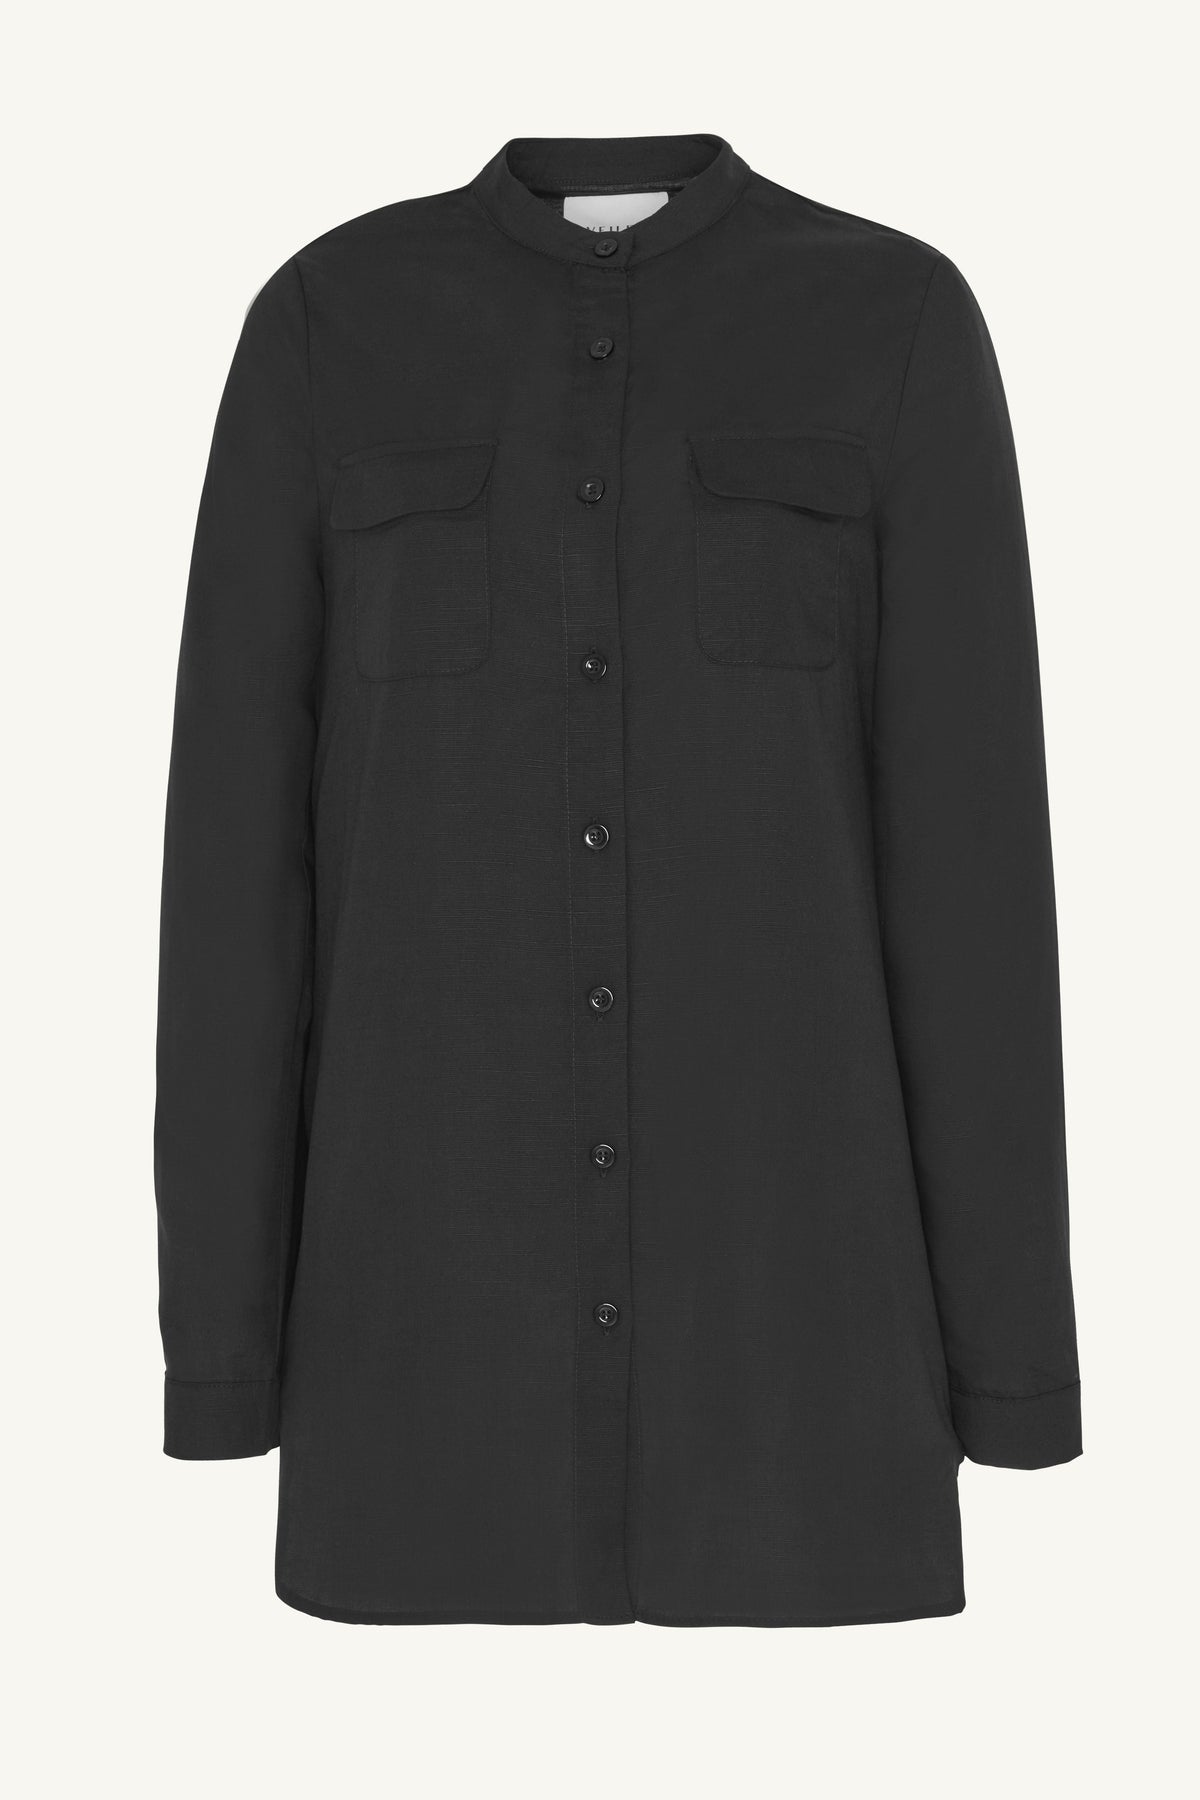 Lamia Cotton Linen Button Down Top - Black Clothing epschoolboard 